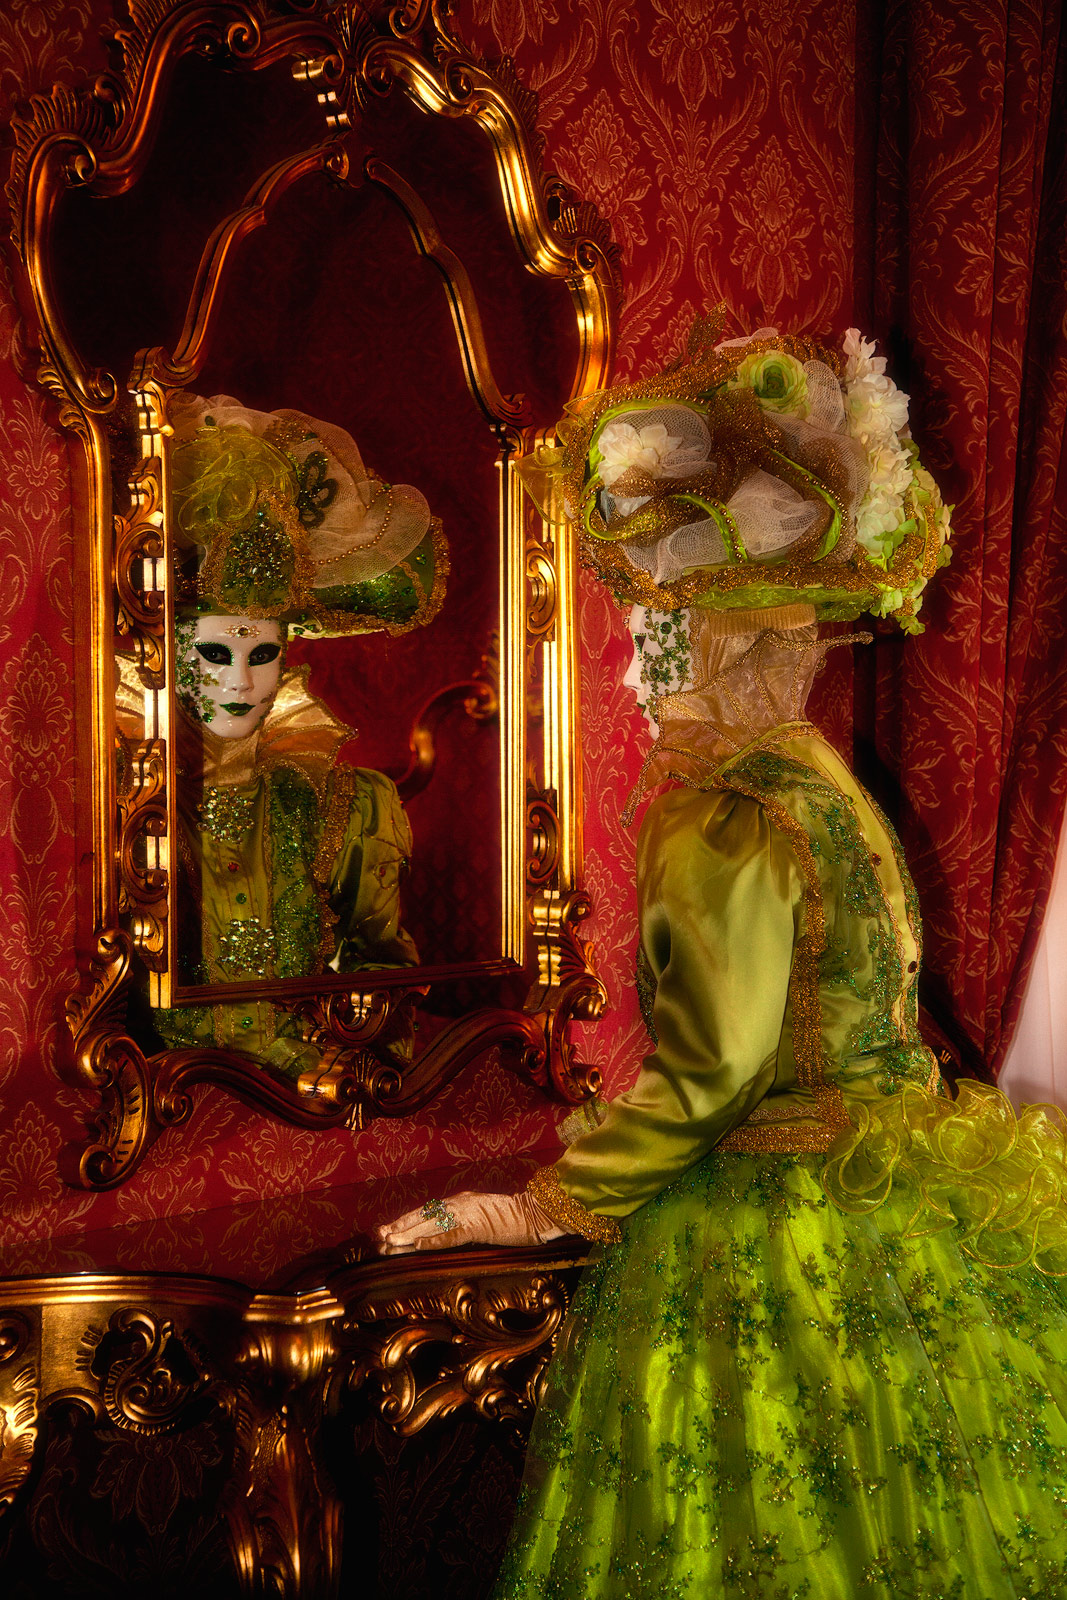 Venice Carnival model gazing into the mirror in an ornate bedroom.